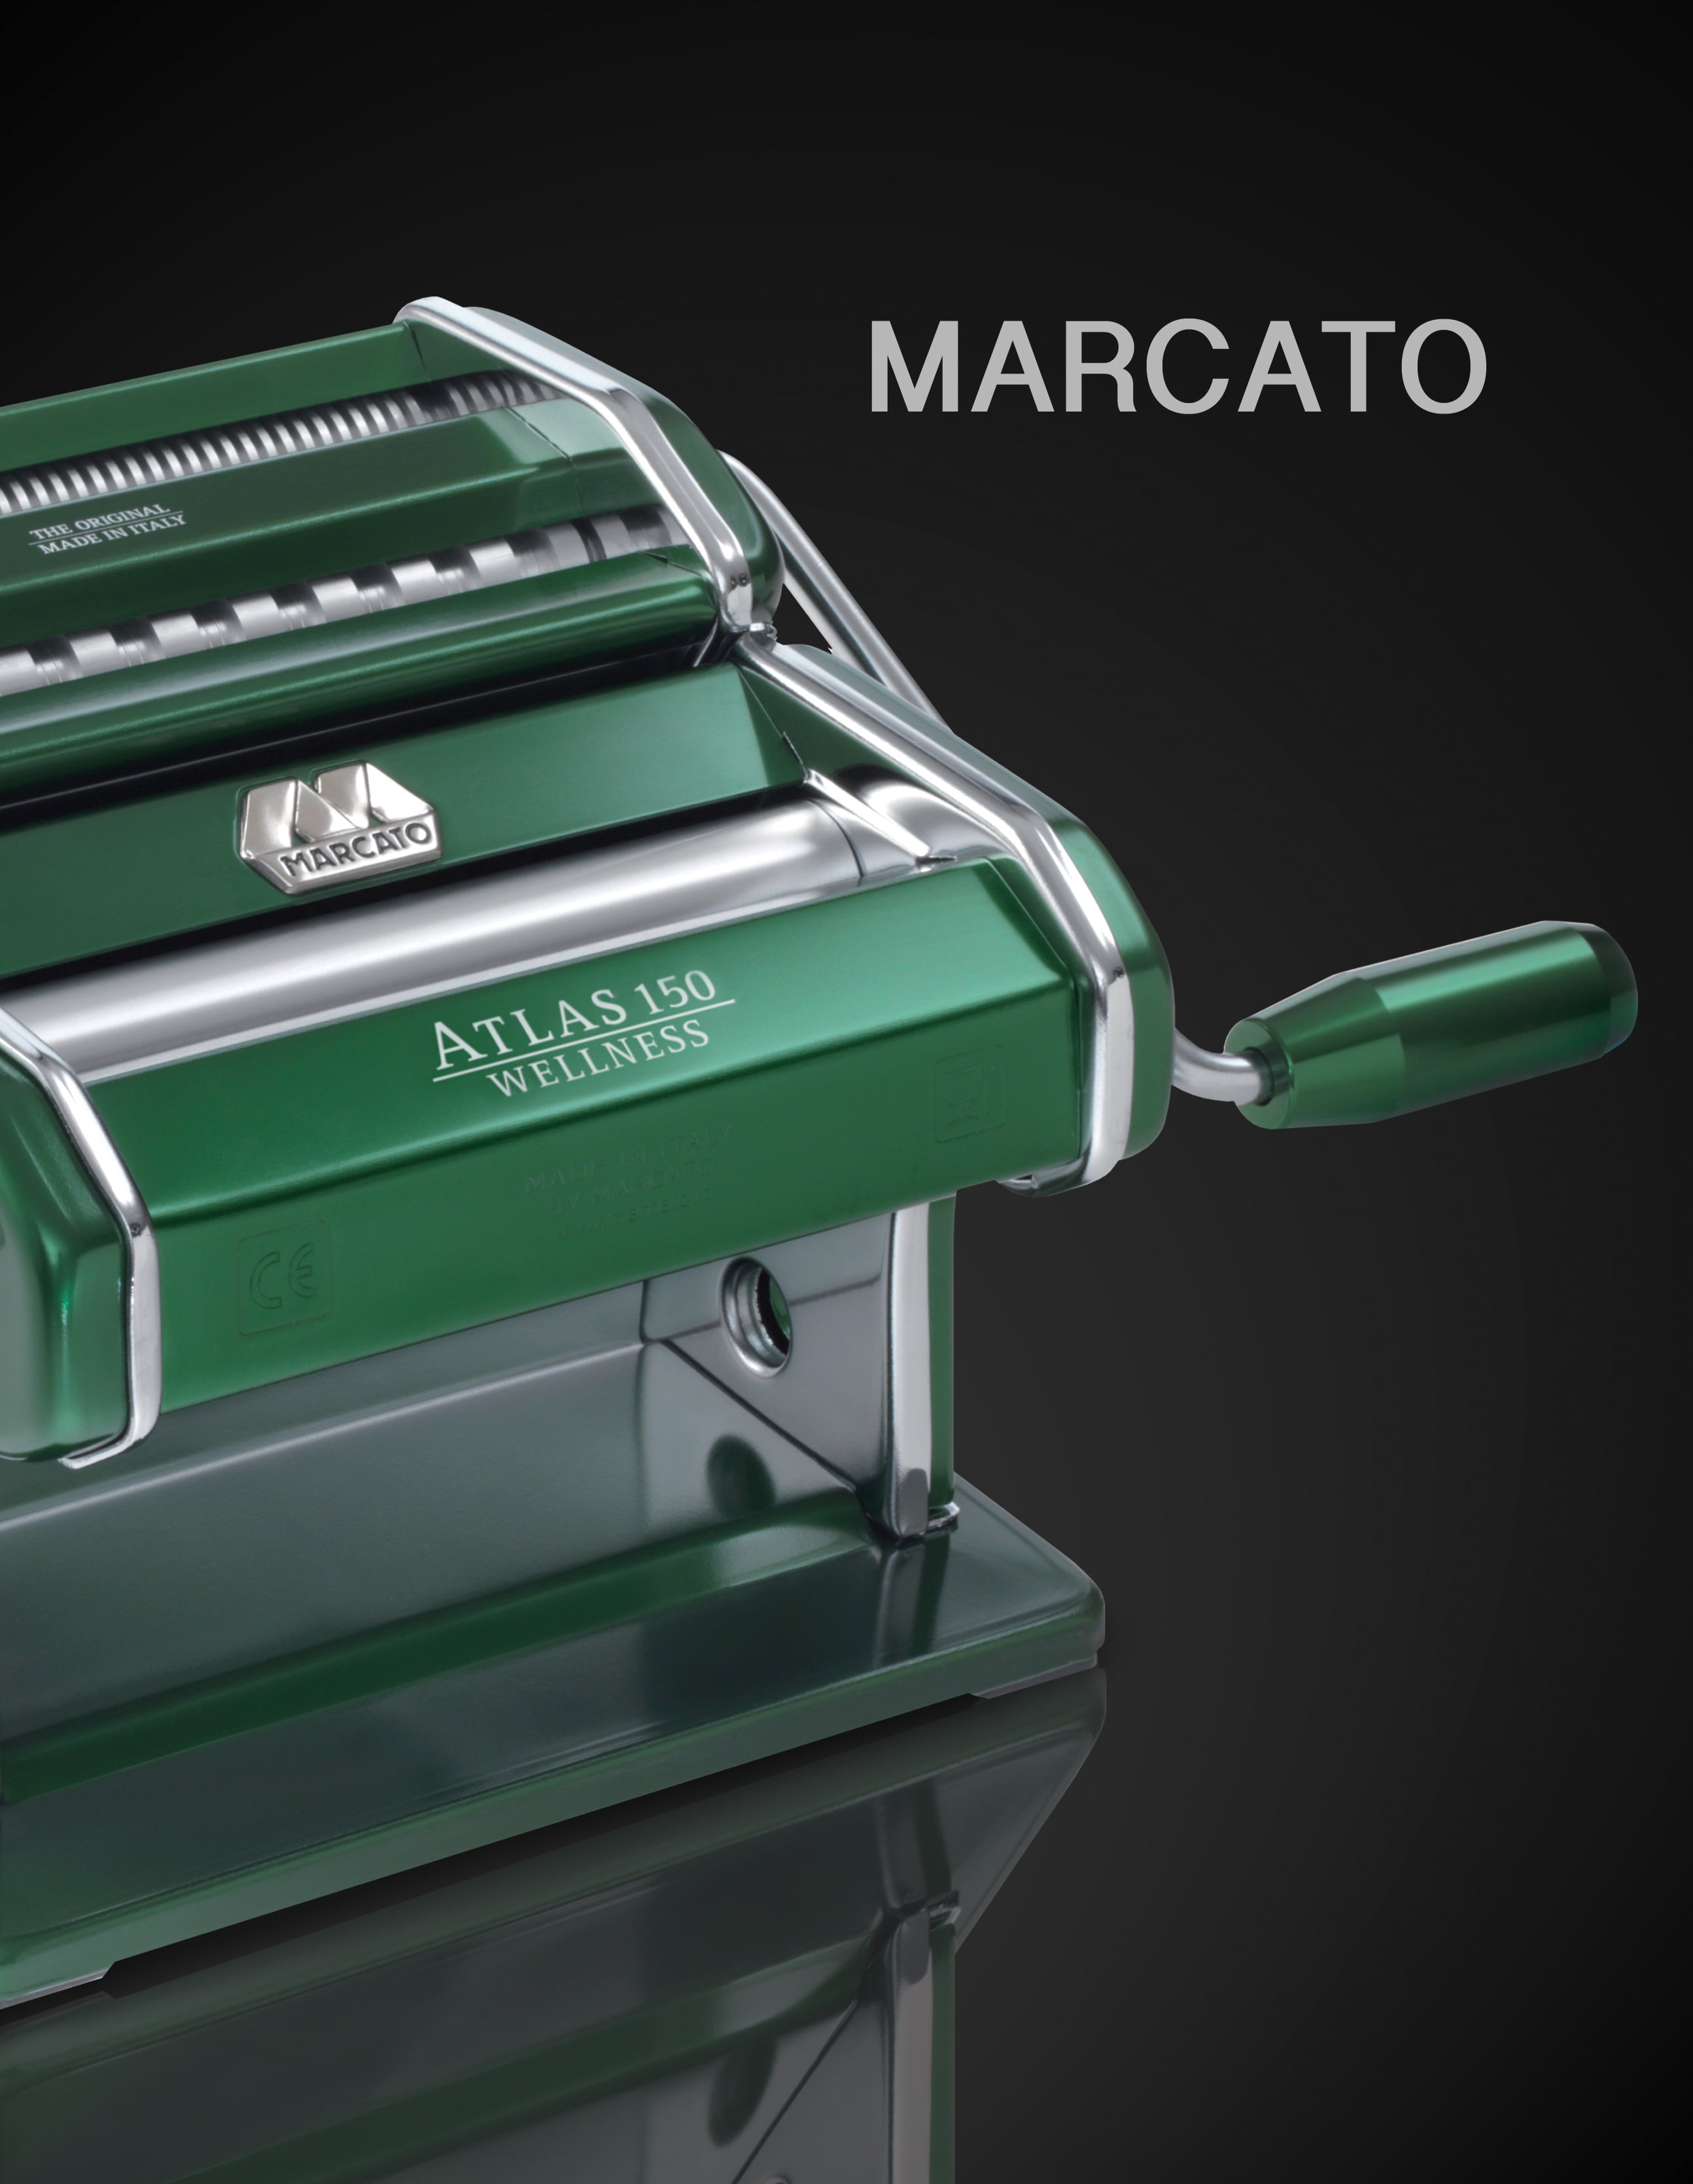 8320PK Marcato Atlas 150 Pasta Machine, manual